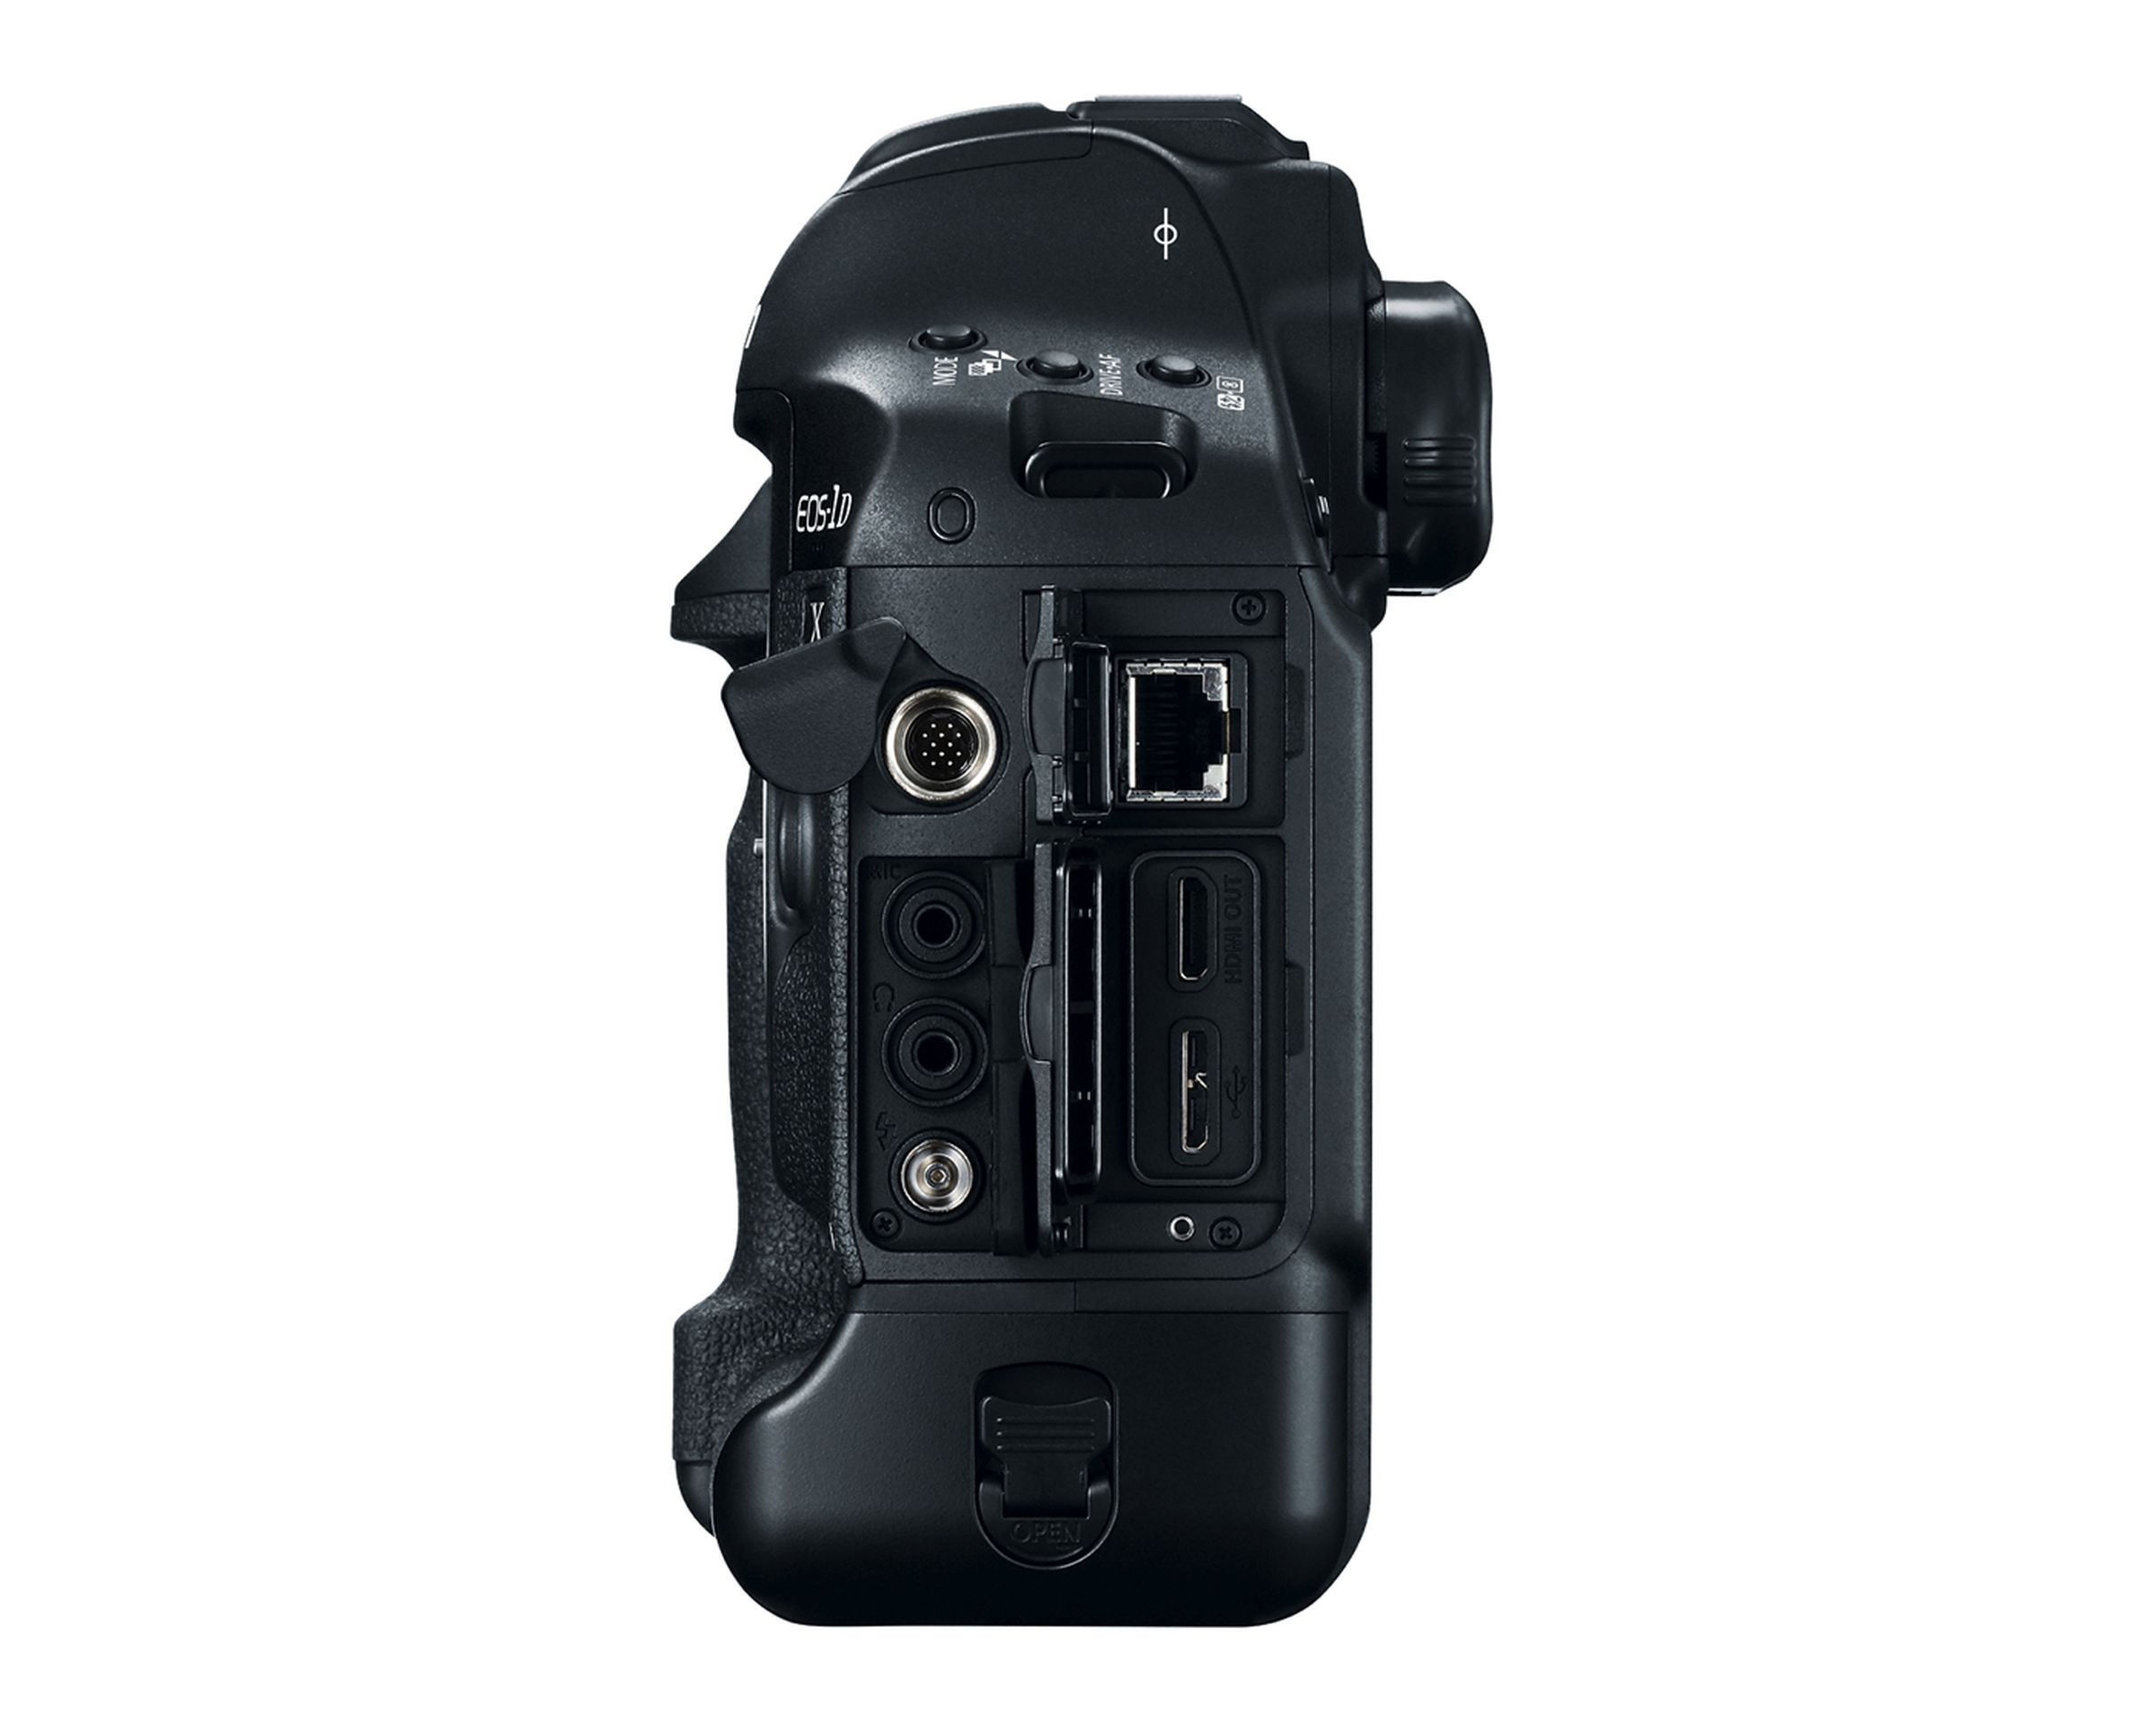 Canon 1D X Mark II press images